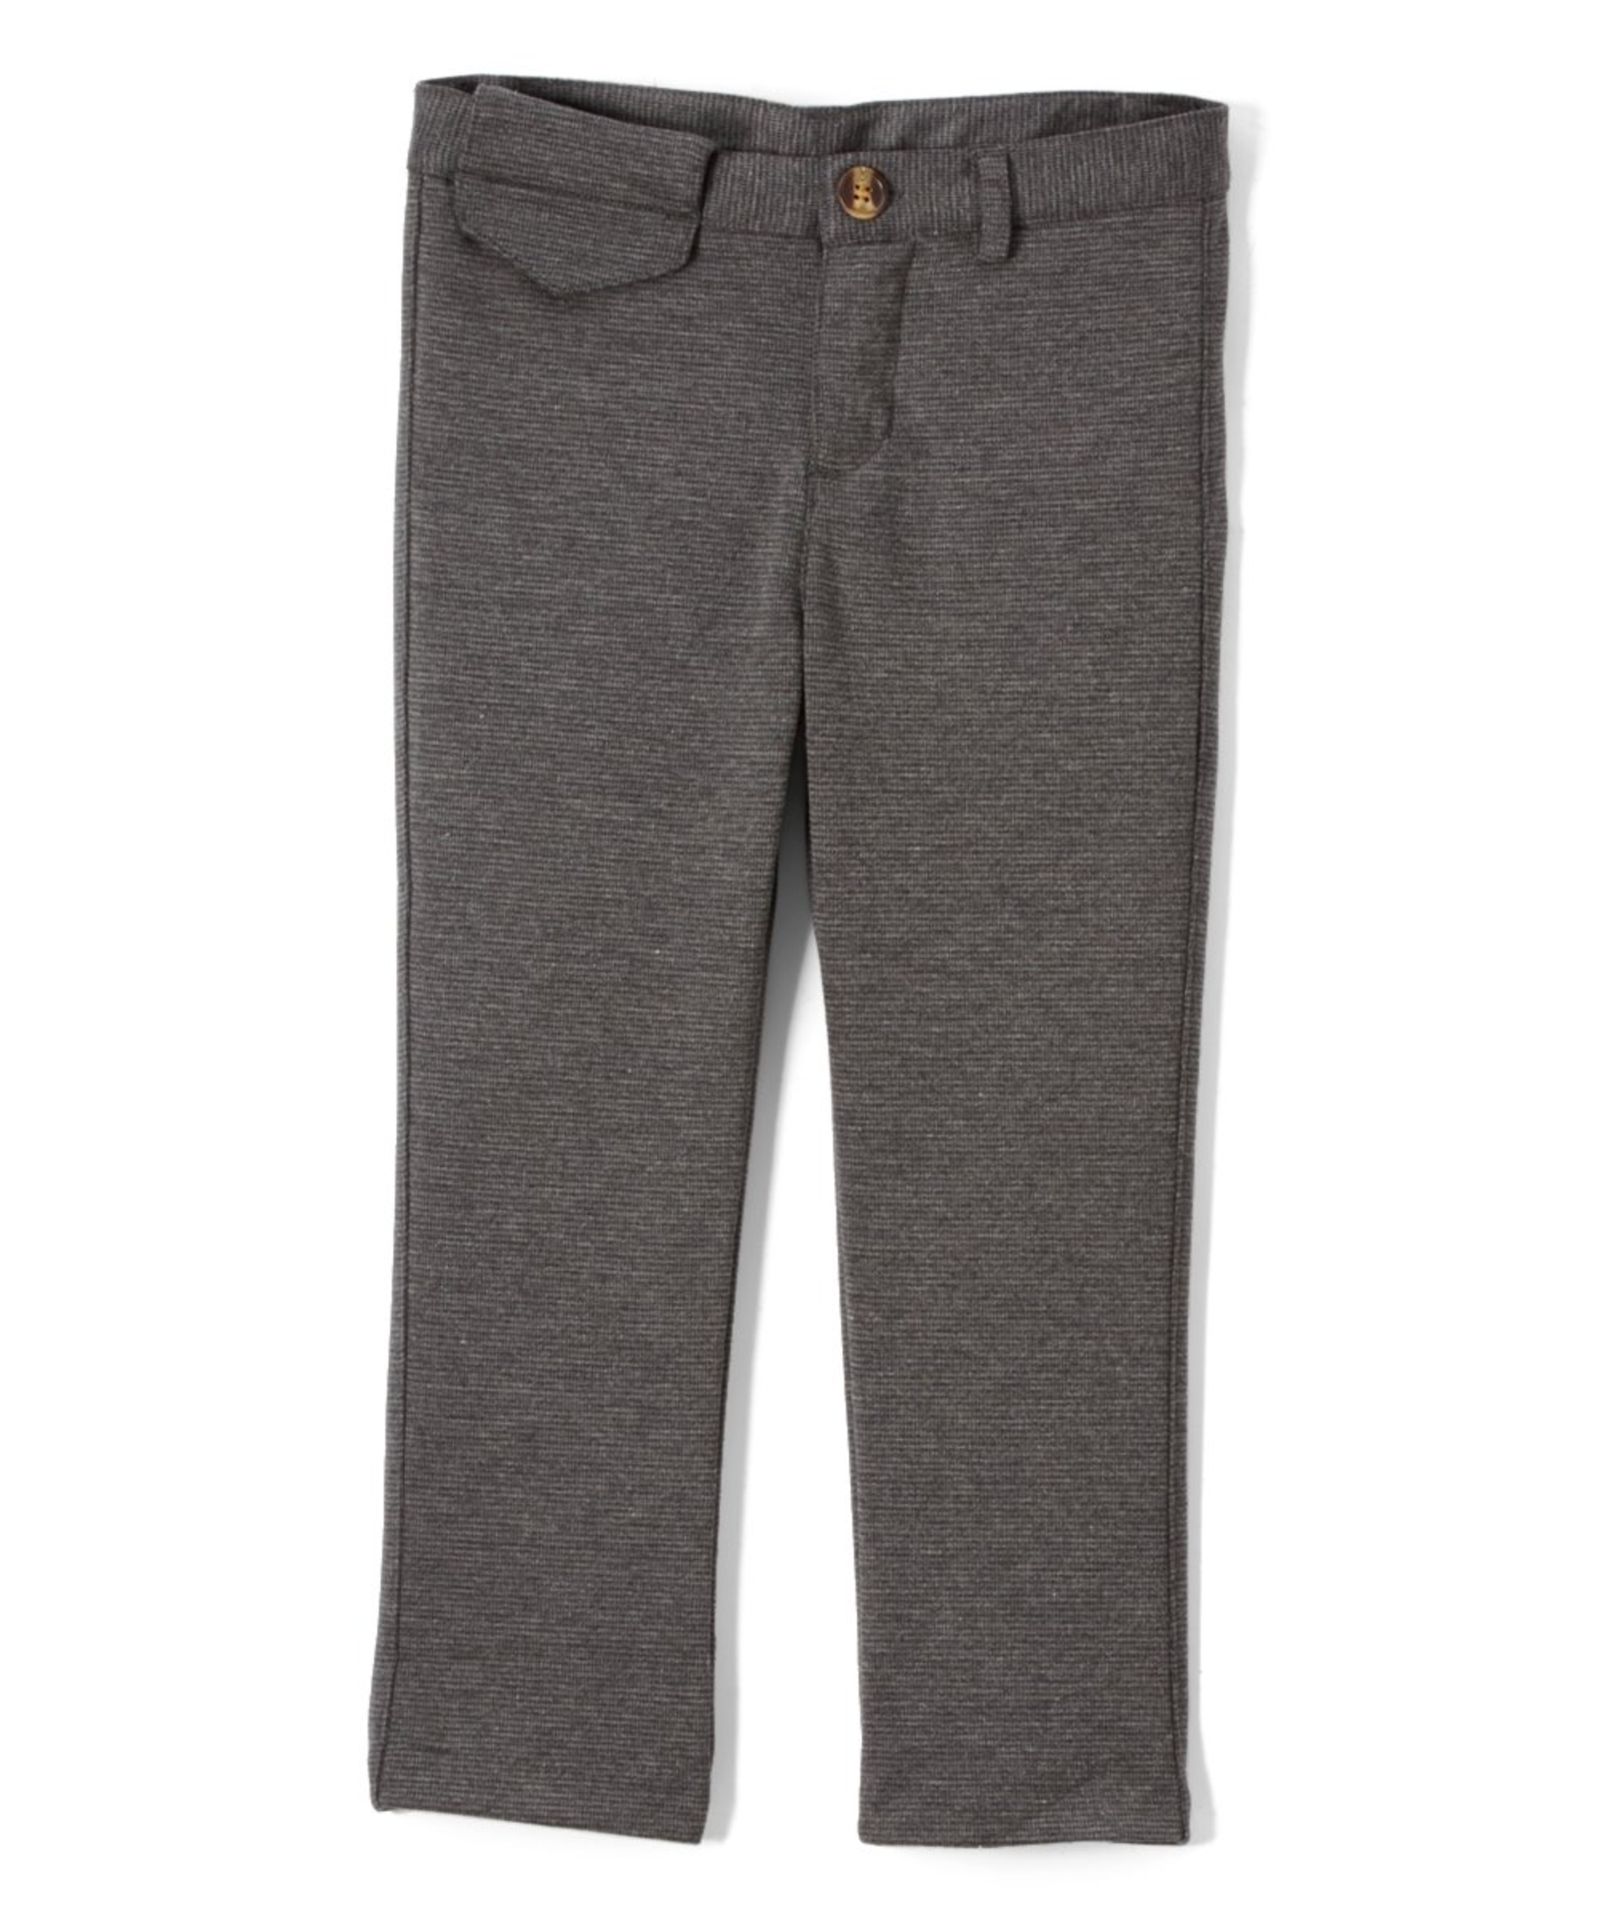 Gray Pocket-Flap Straight-Leg Pants - Infant, Toddler & Boys